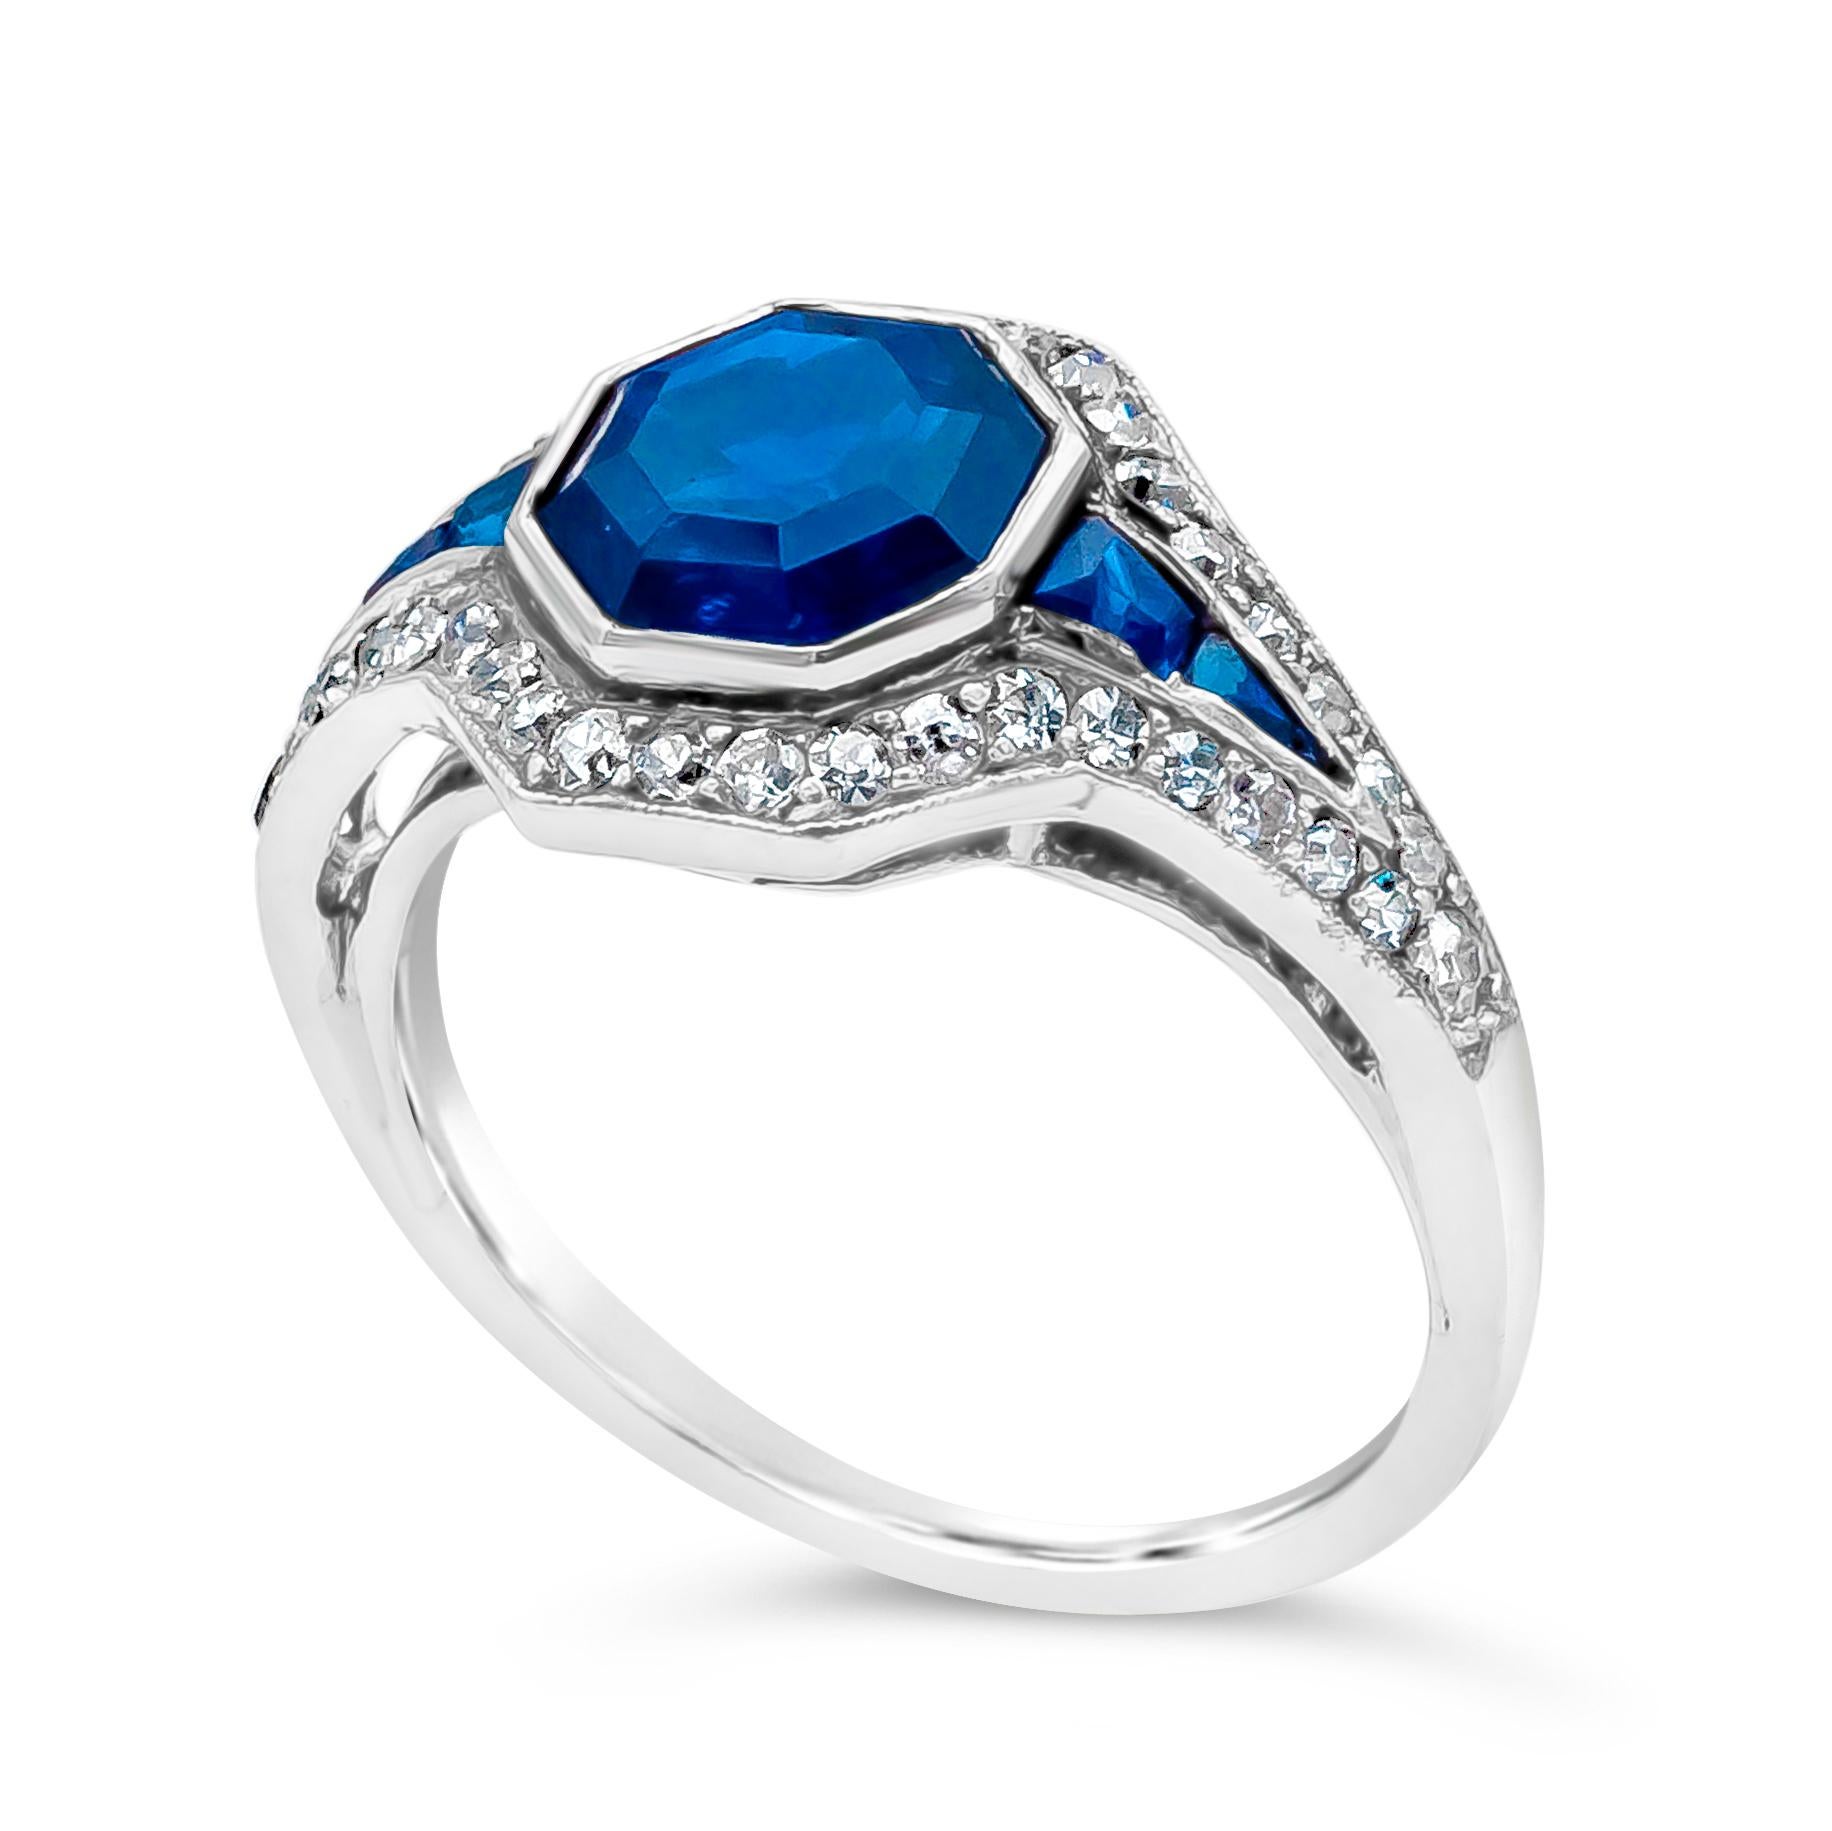 Edwardian Antique 1.53 Carat Asscher Cut Blue Sapphire Engagement Ring For Sale